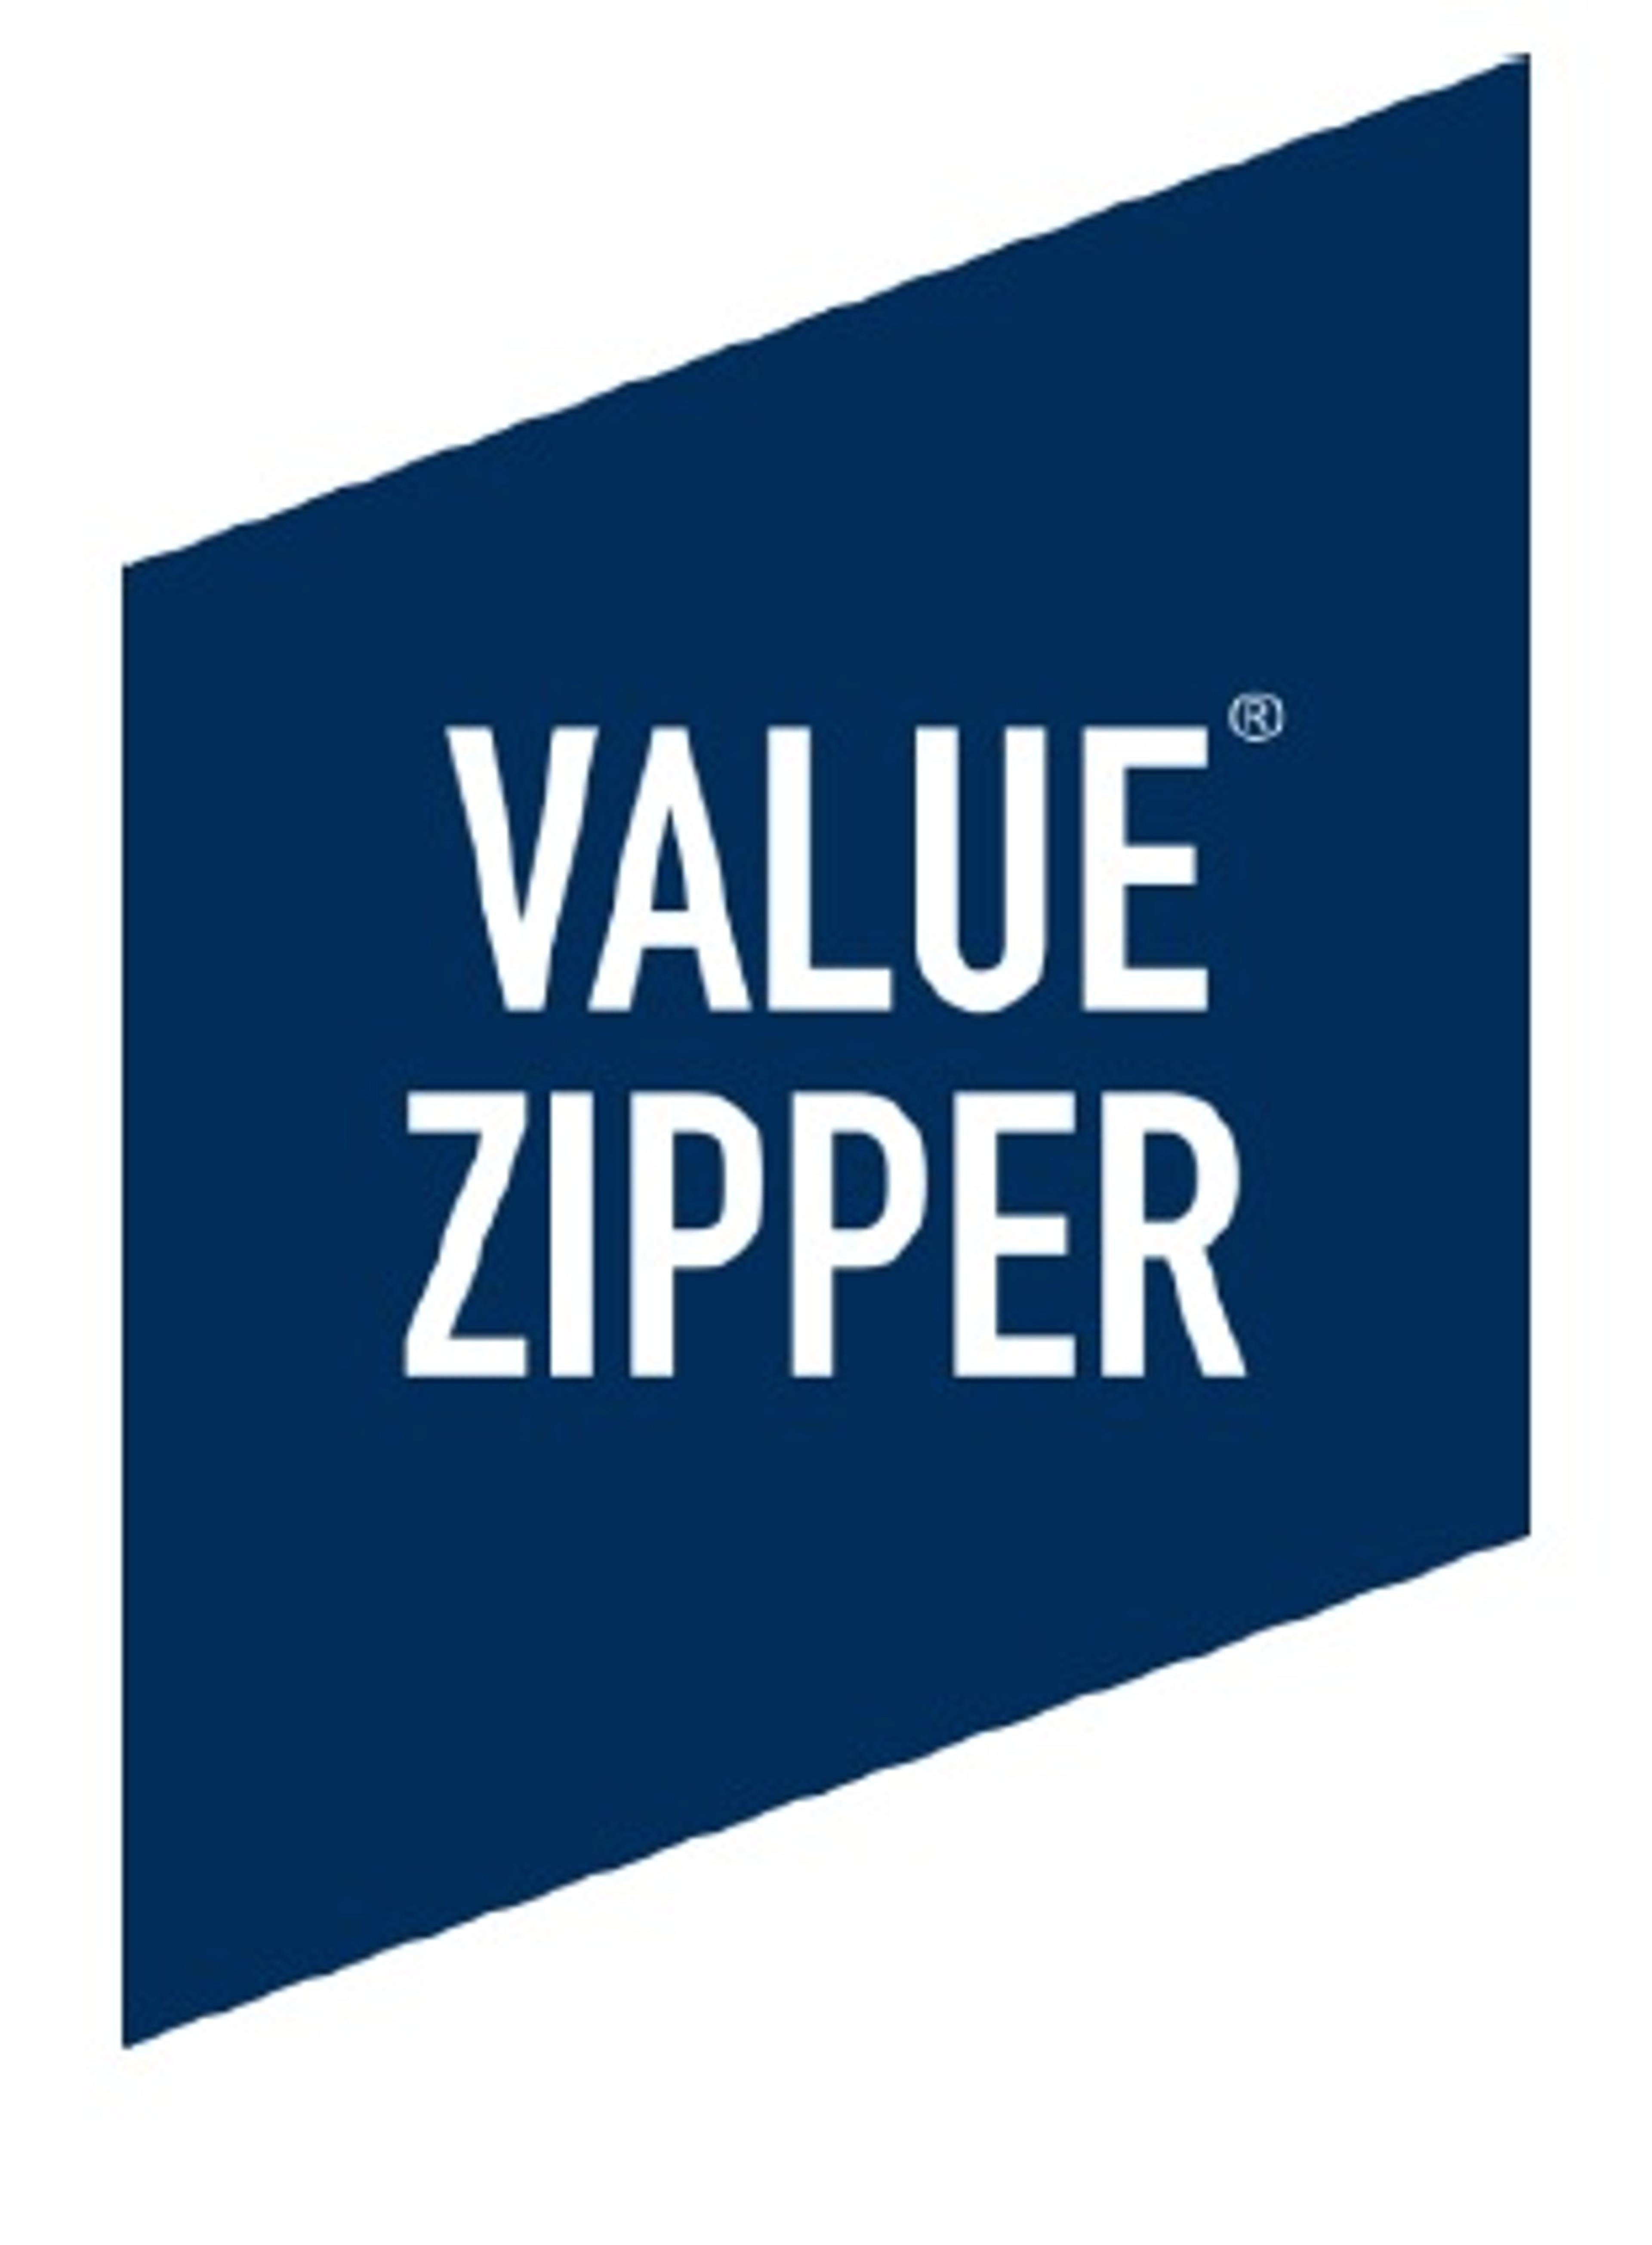 Value Zipper verzorgt exploitatie van Veen Media titels